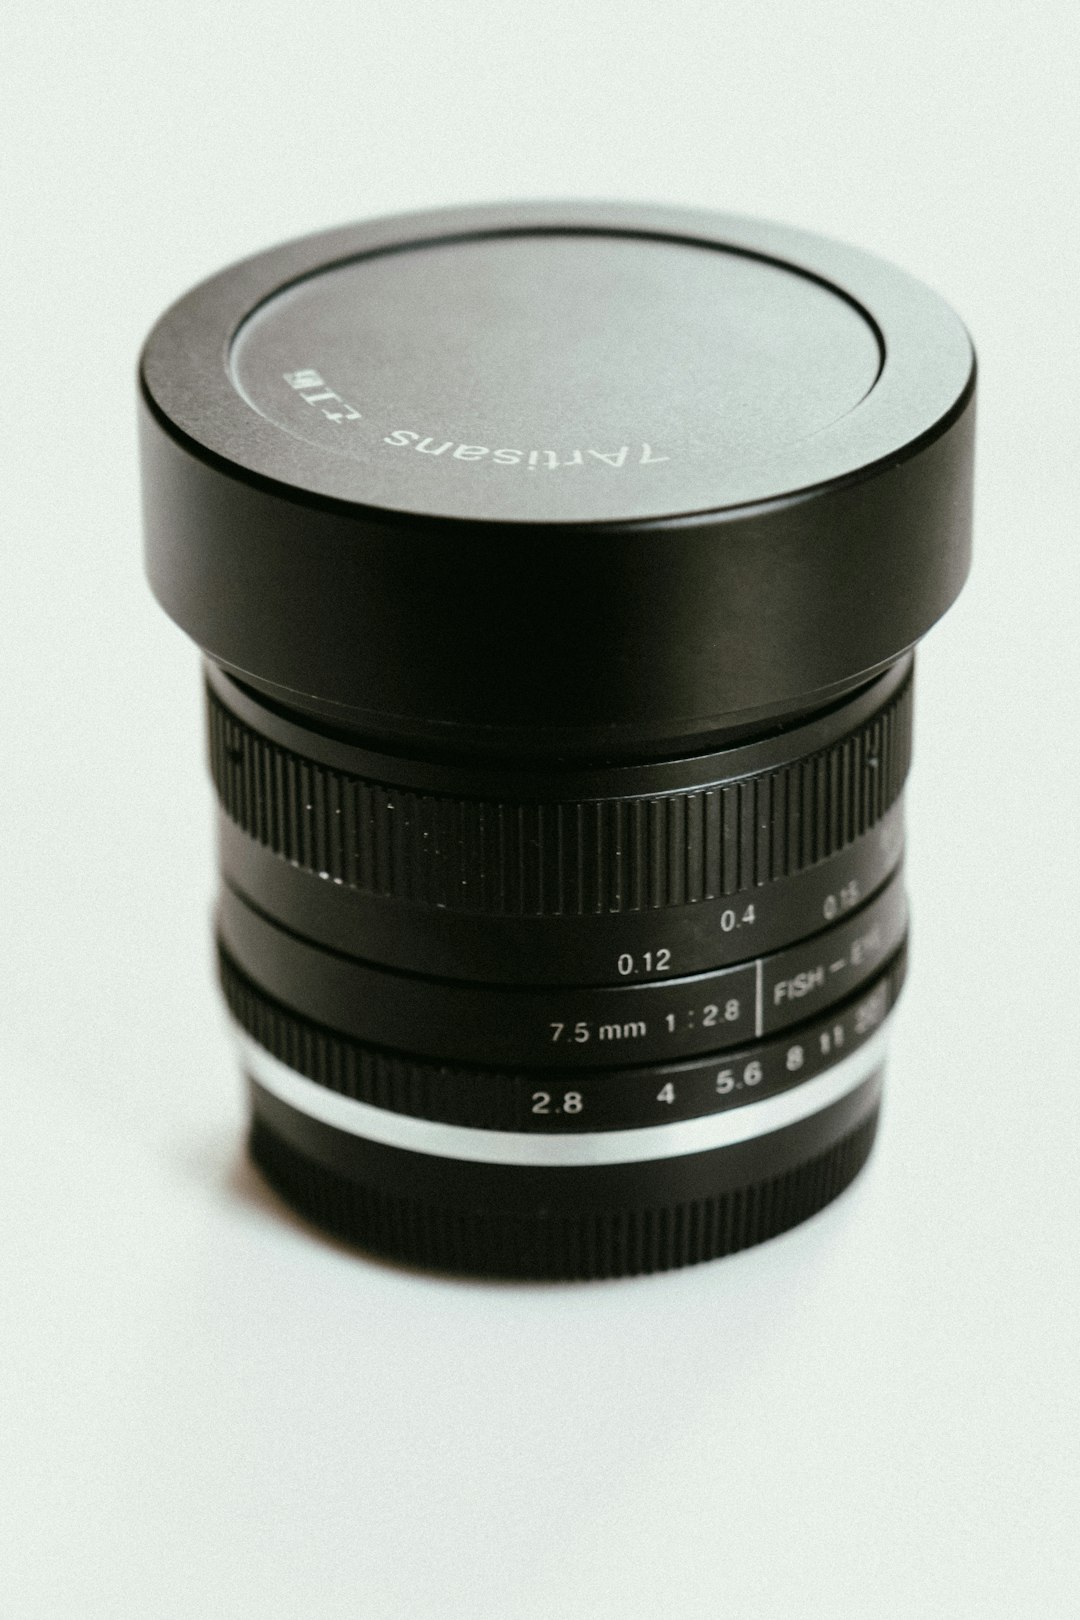 black canon camera lens on white surface